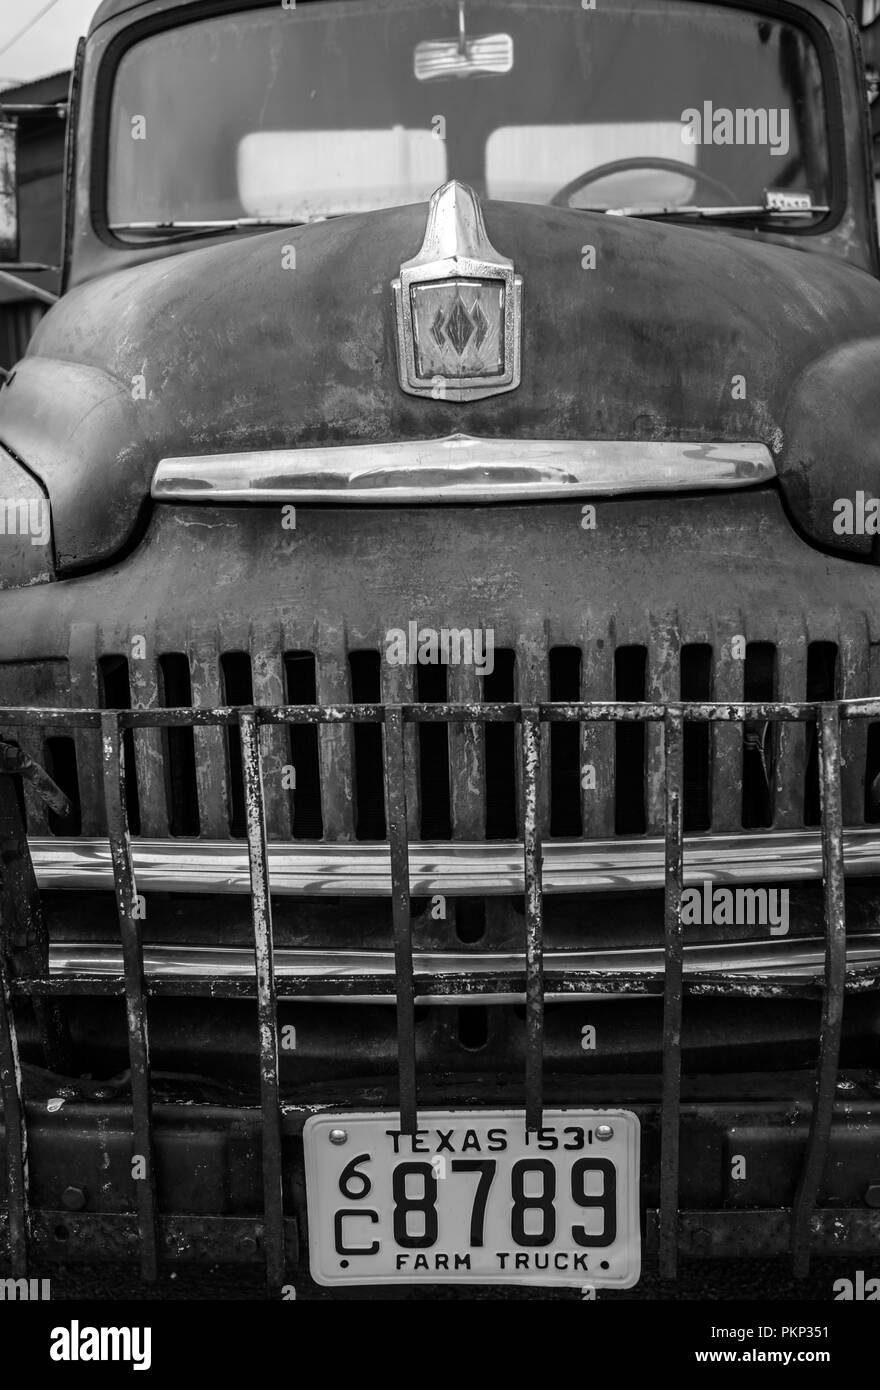 Old truck, Texas, USA Stock Photo